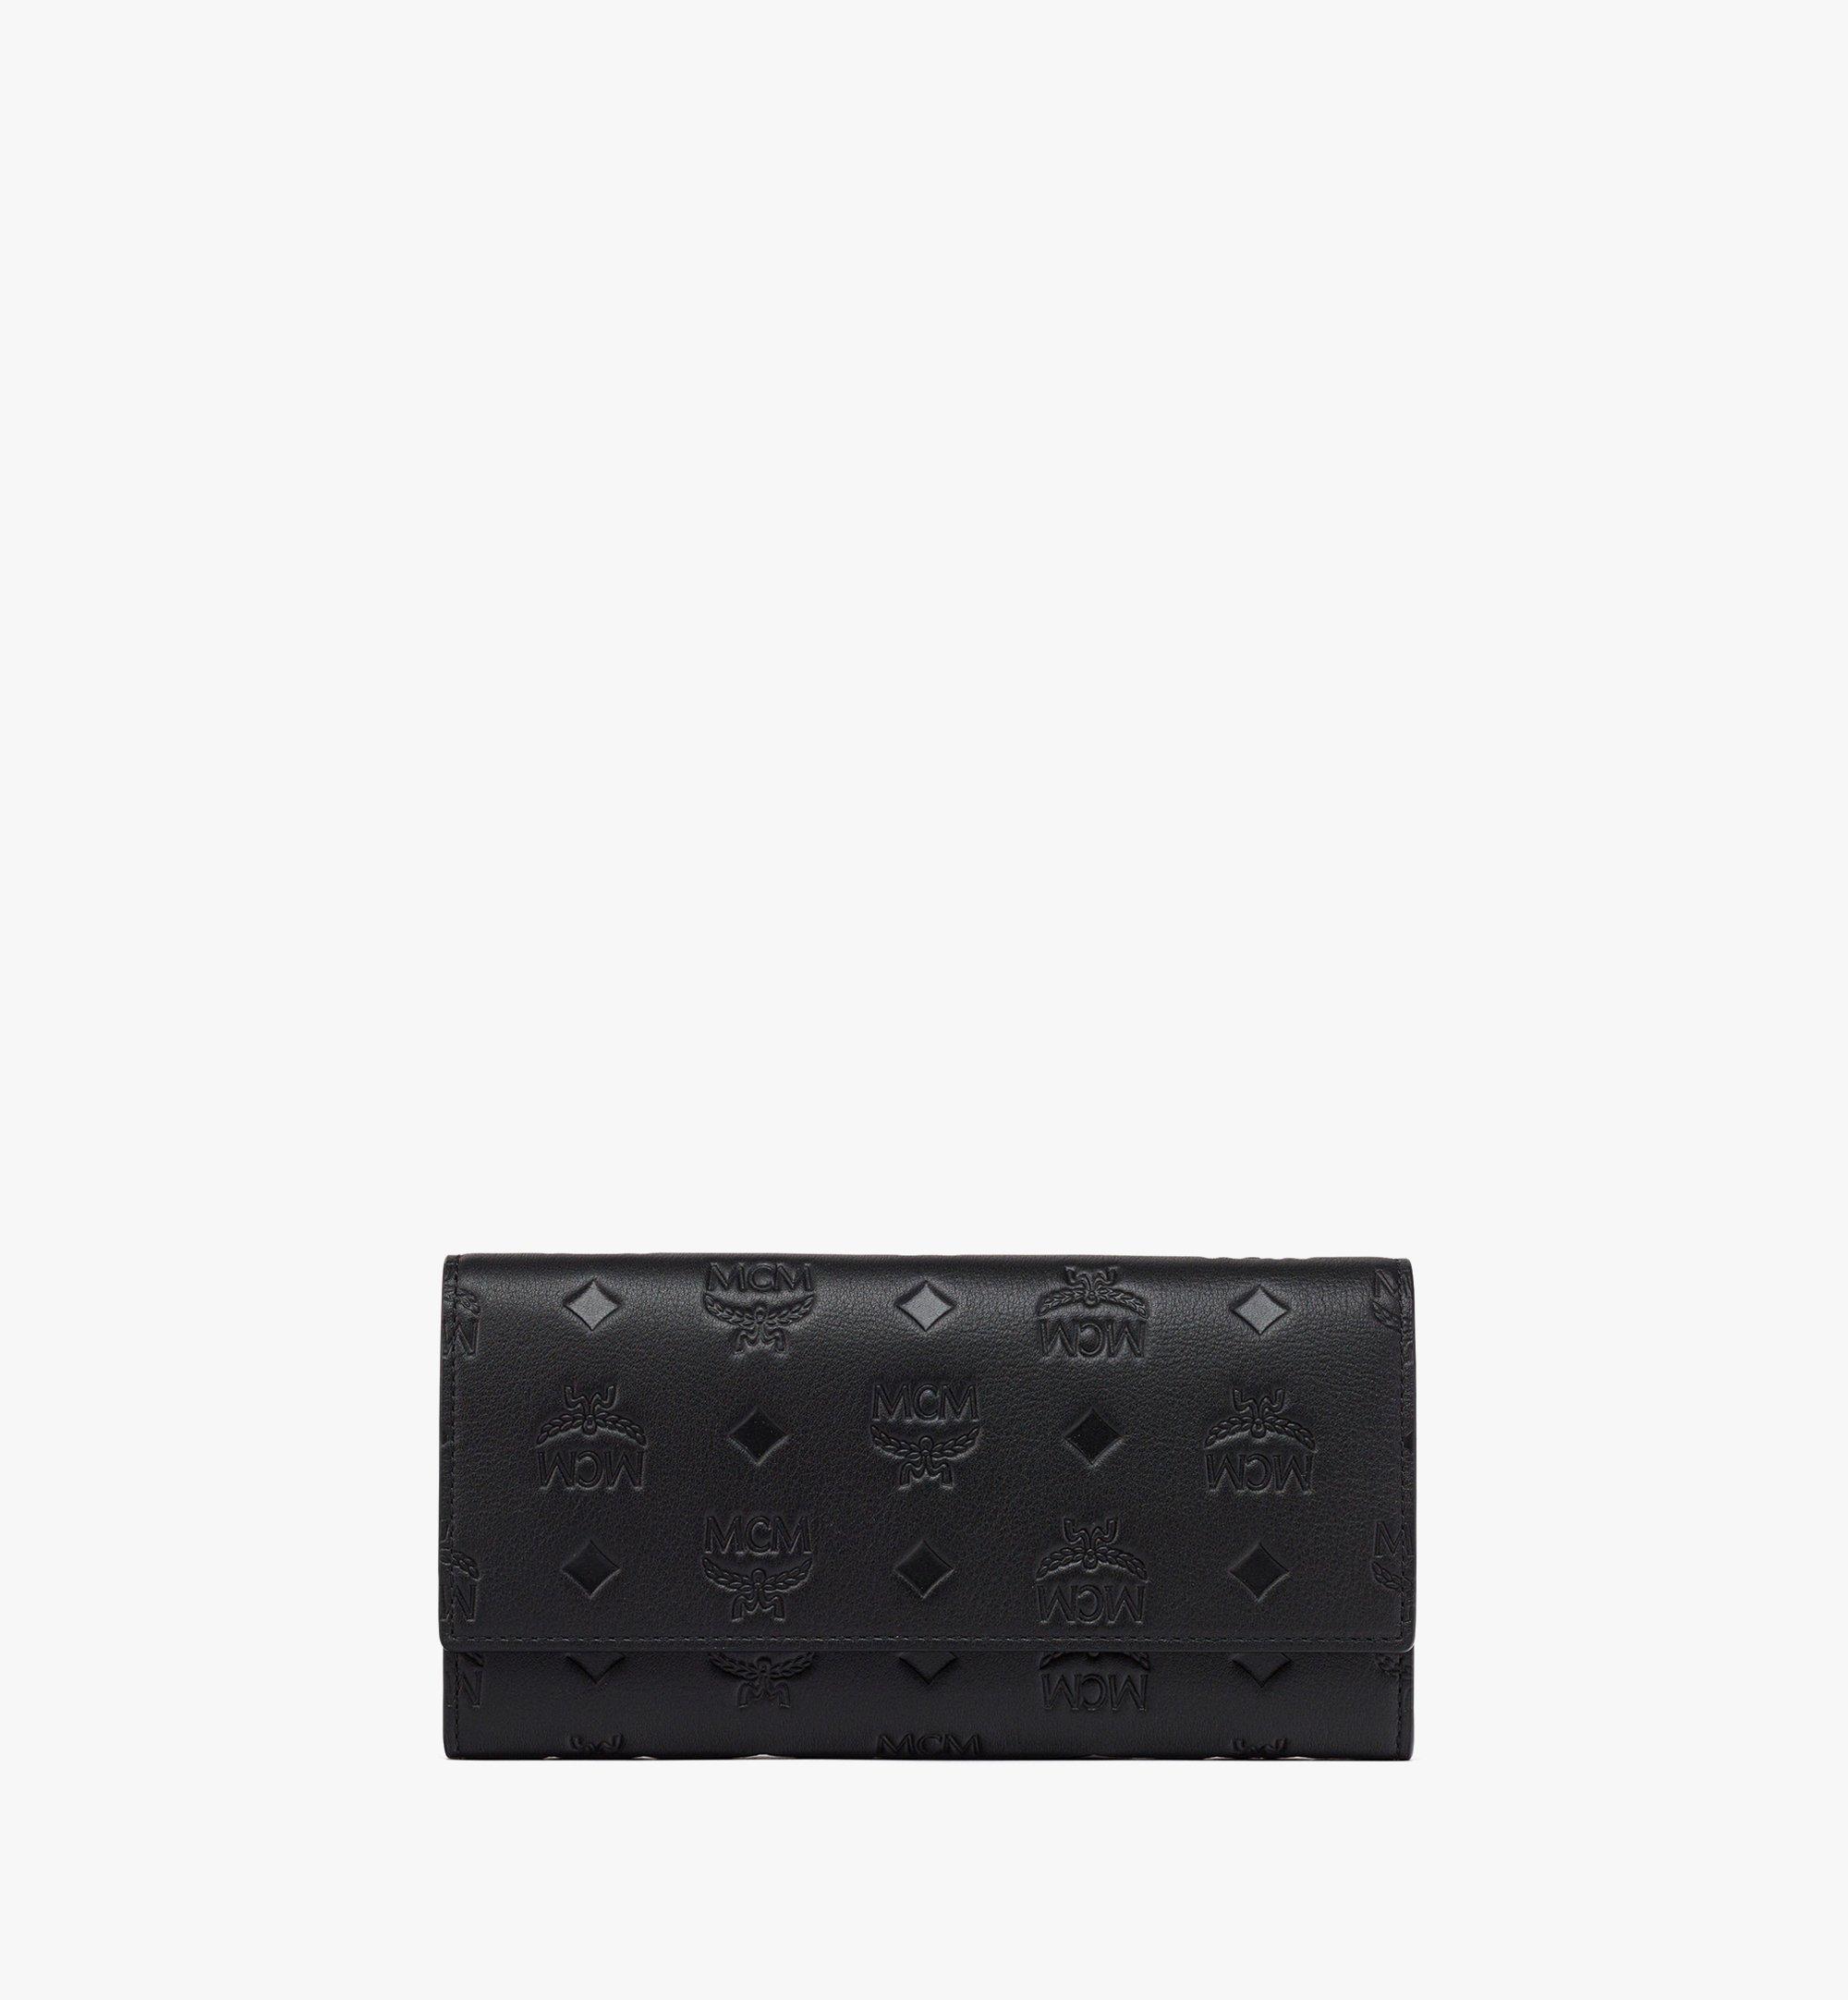 MCM Aren Continental Wallet in Embossed Monogram Leather Black MYLDATA08BK001 Alternate View 1